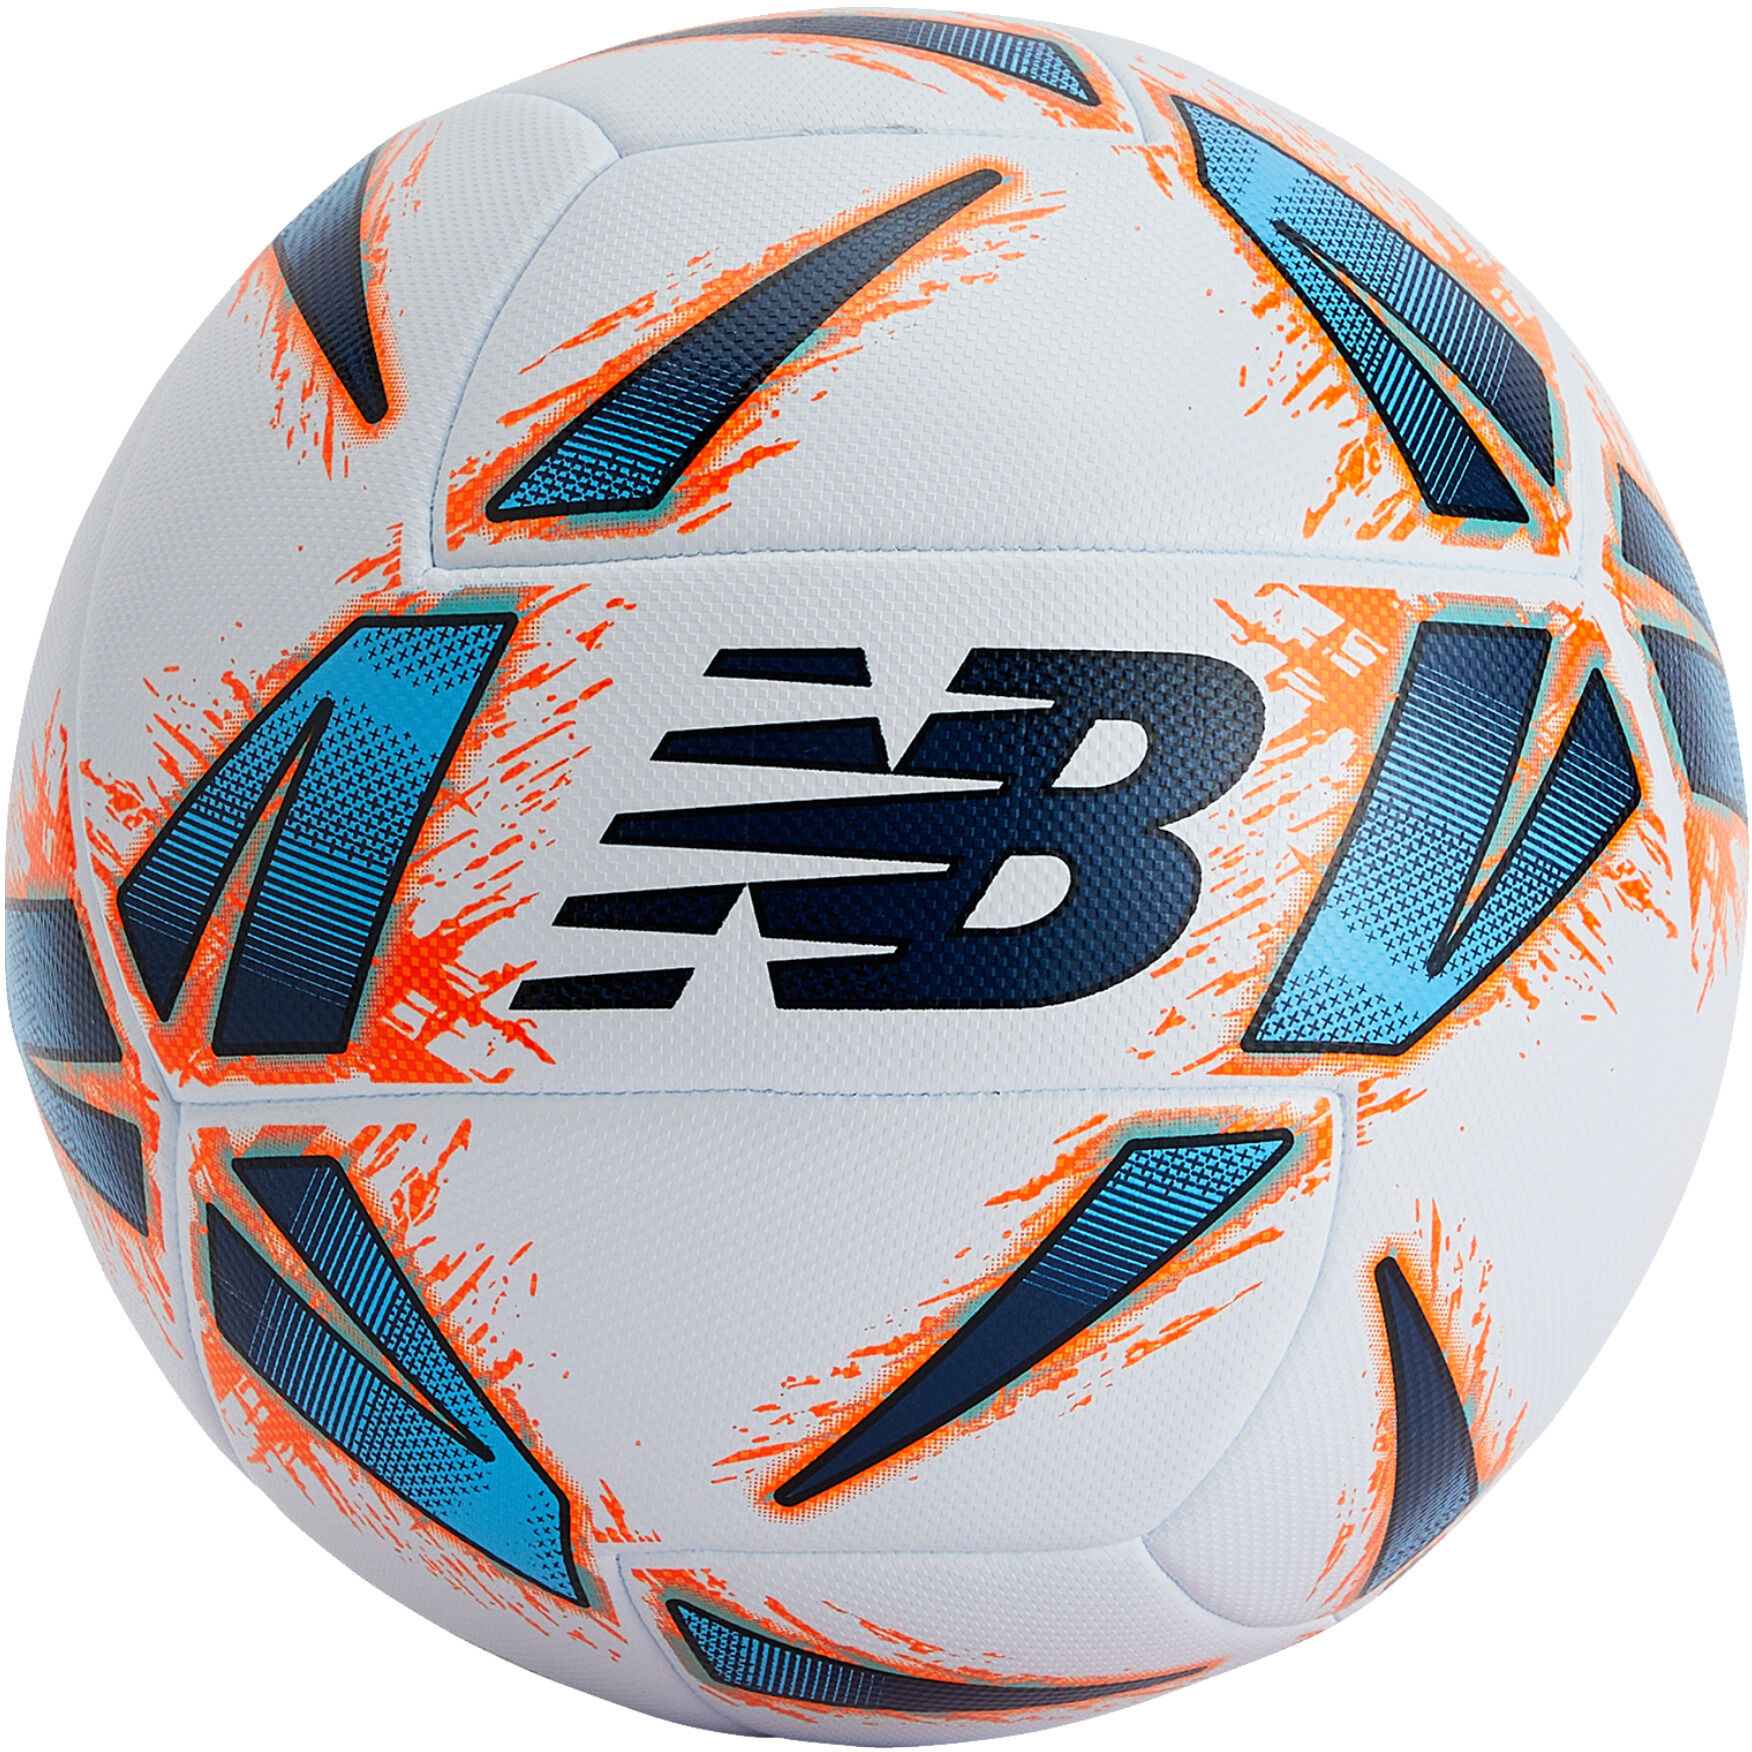 New Balance Geodesa Match Football - FIFA Quality Labda